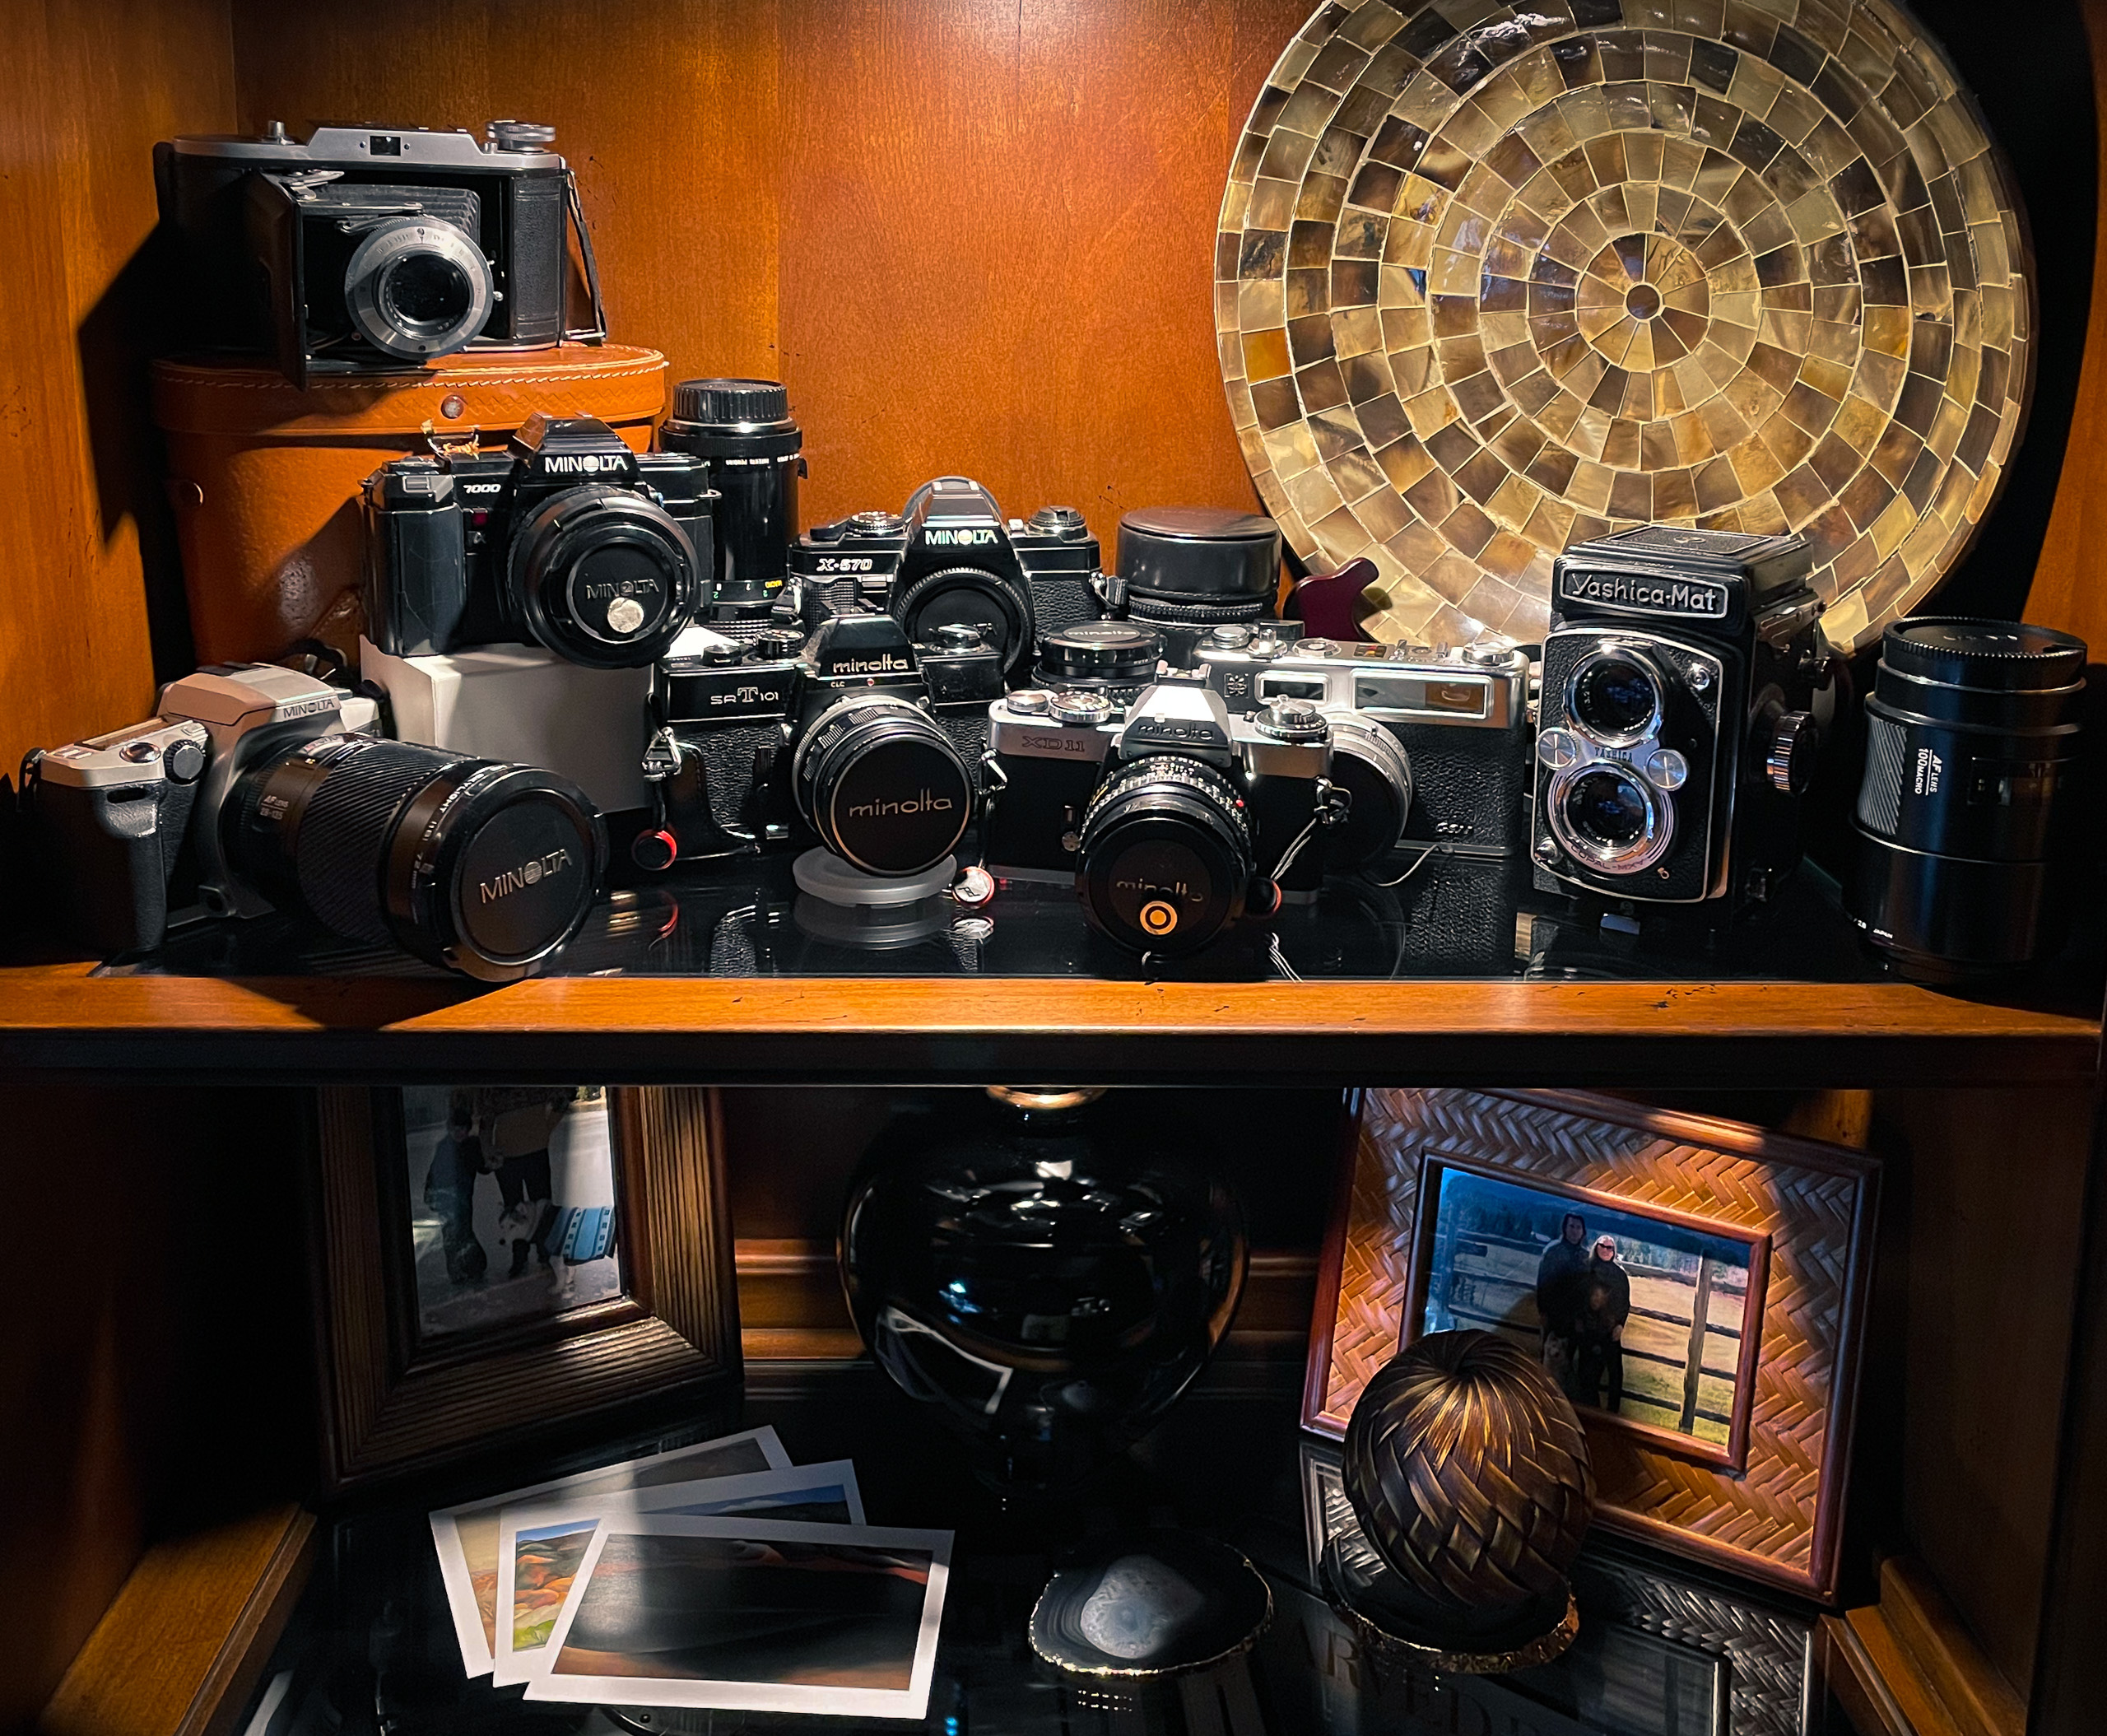 Collection of film cameras including medium format Yashica-Mat and Voigtlander Bessa I, Electro 35 rangefinder, and multiple generations of Minolta SLRs.